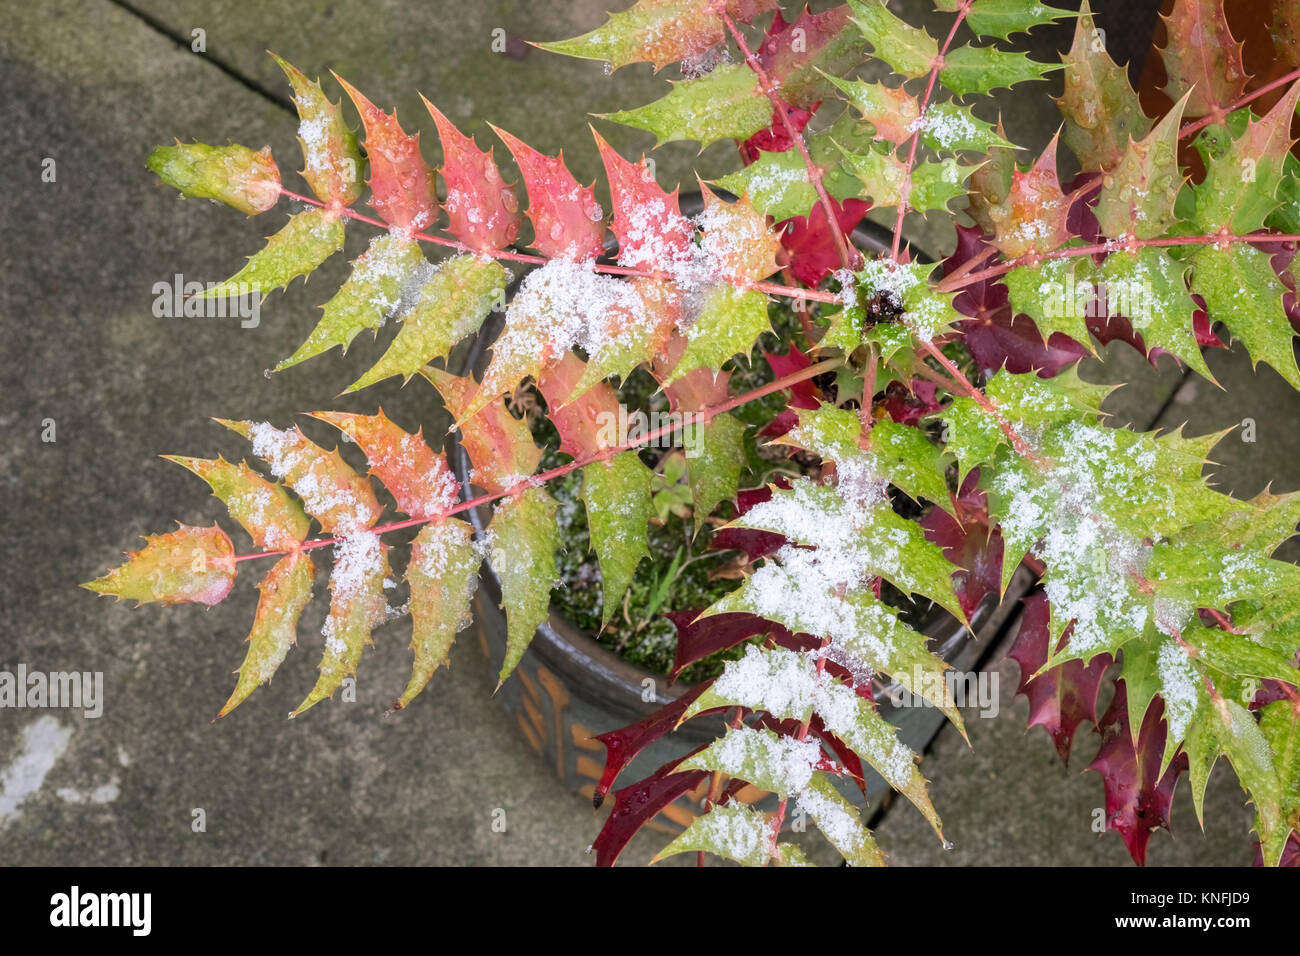 Evergreen shrub Mahonia japonica with autumn winter foliage, December, England UK Stock Photo